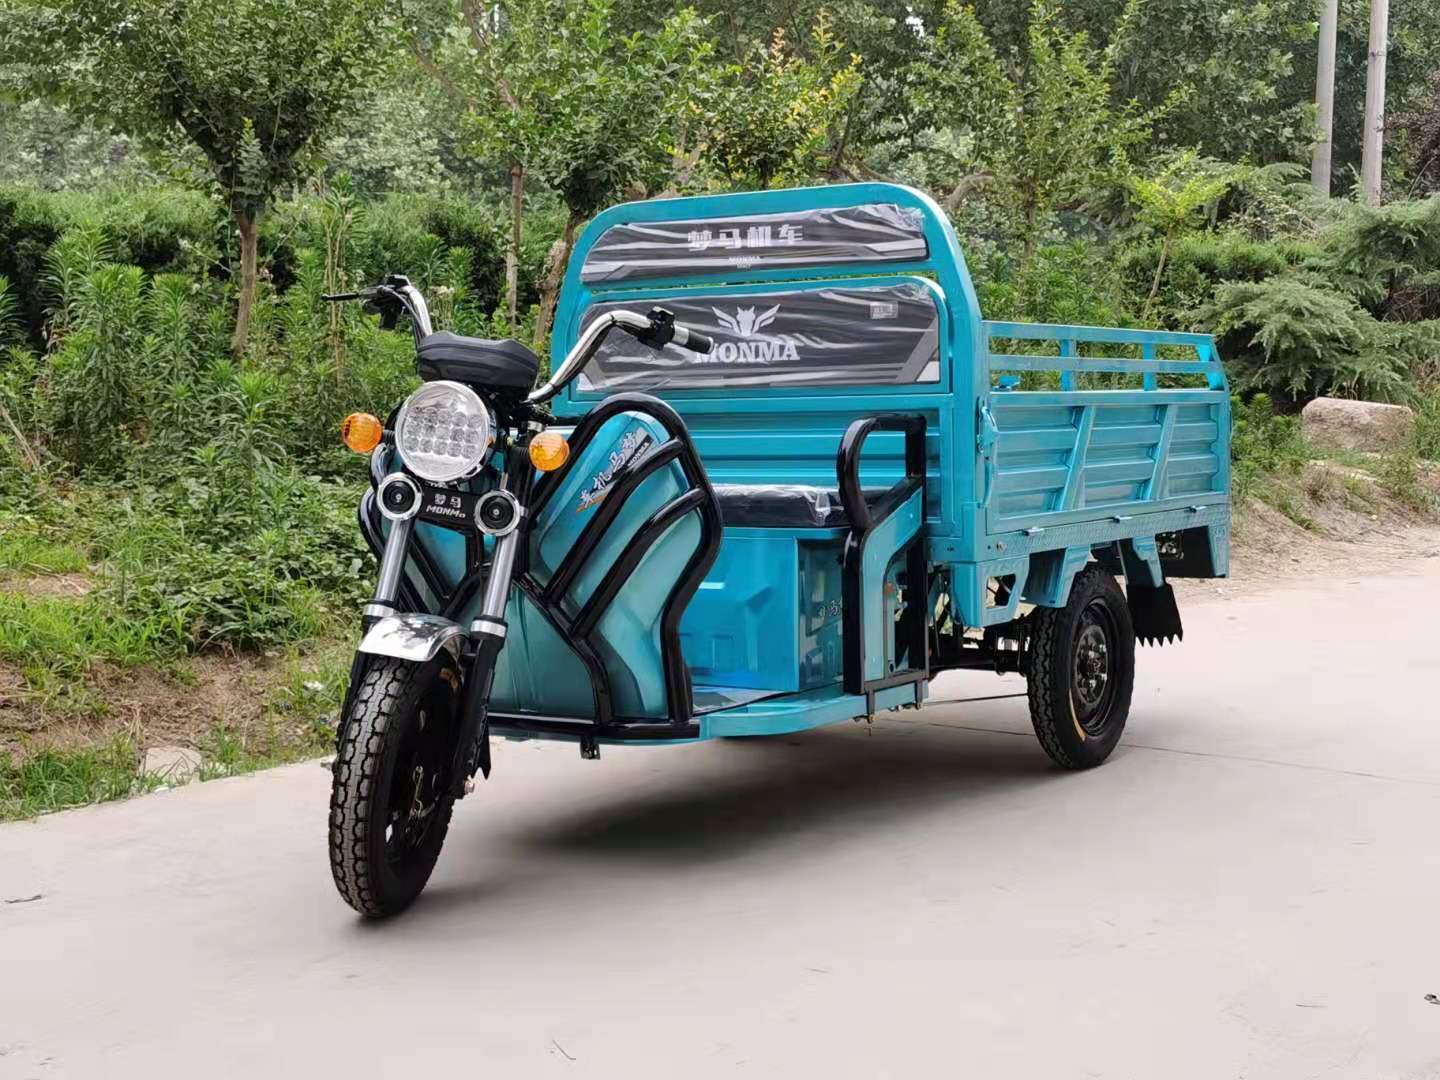 3 Ruedas bicicleta eléctrica triciclo de carga trasera con - China